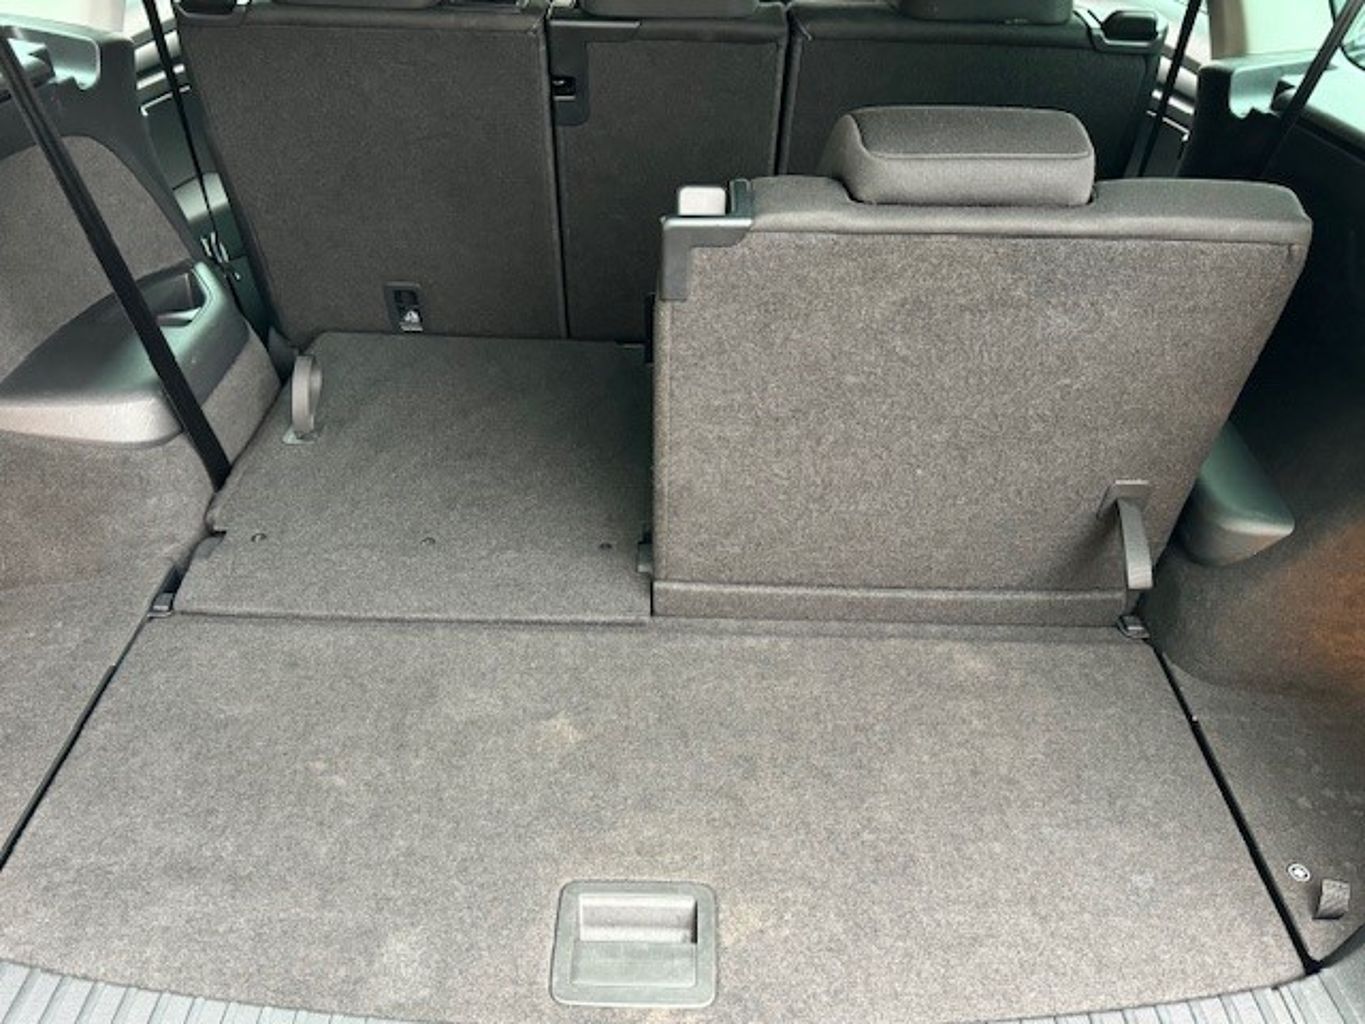 SKODA Kodiaq 1.5 TSI (150ps) SE (7 seats) ACT SUV